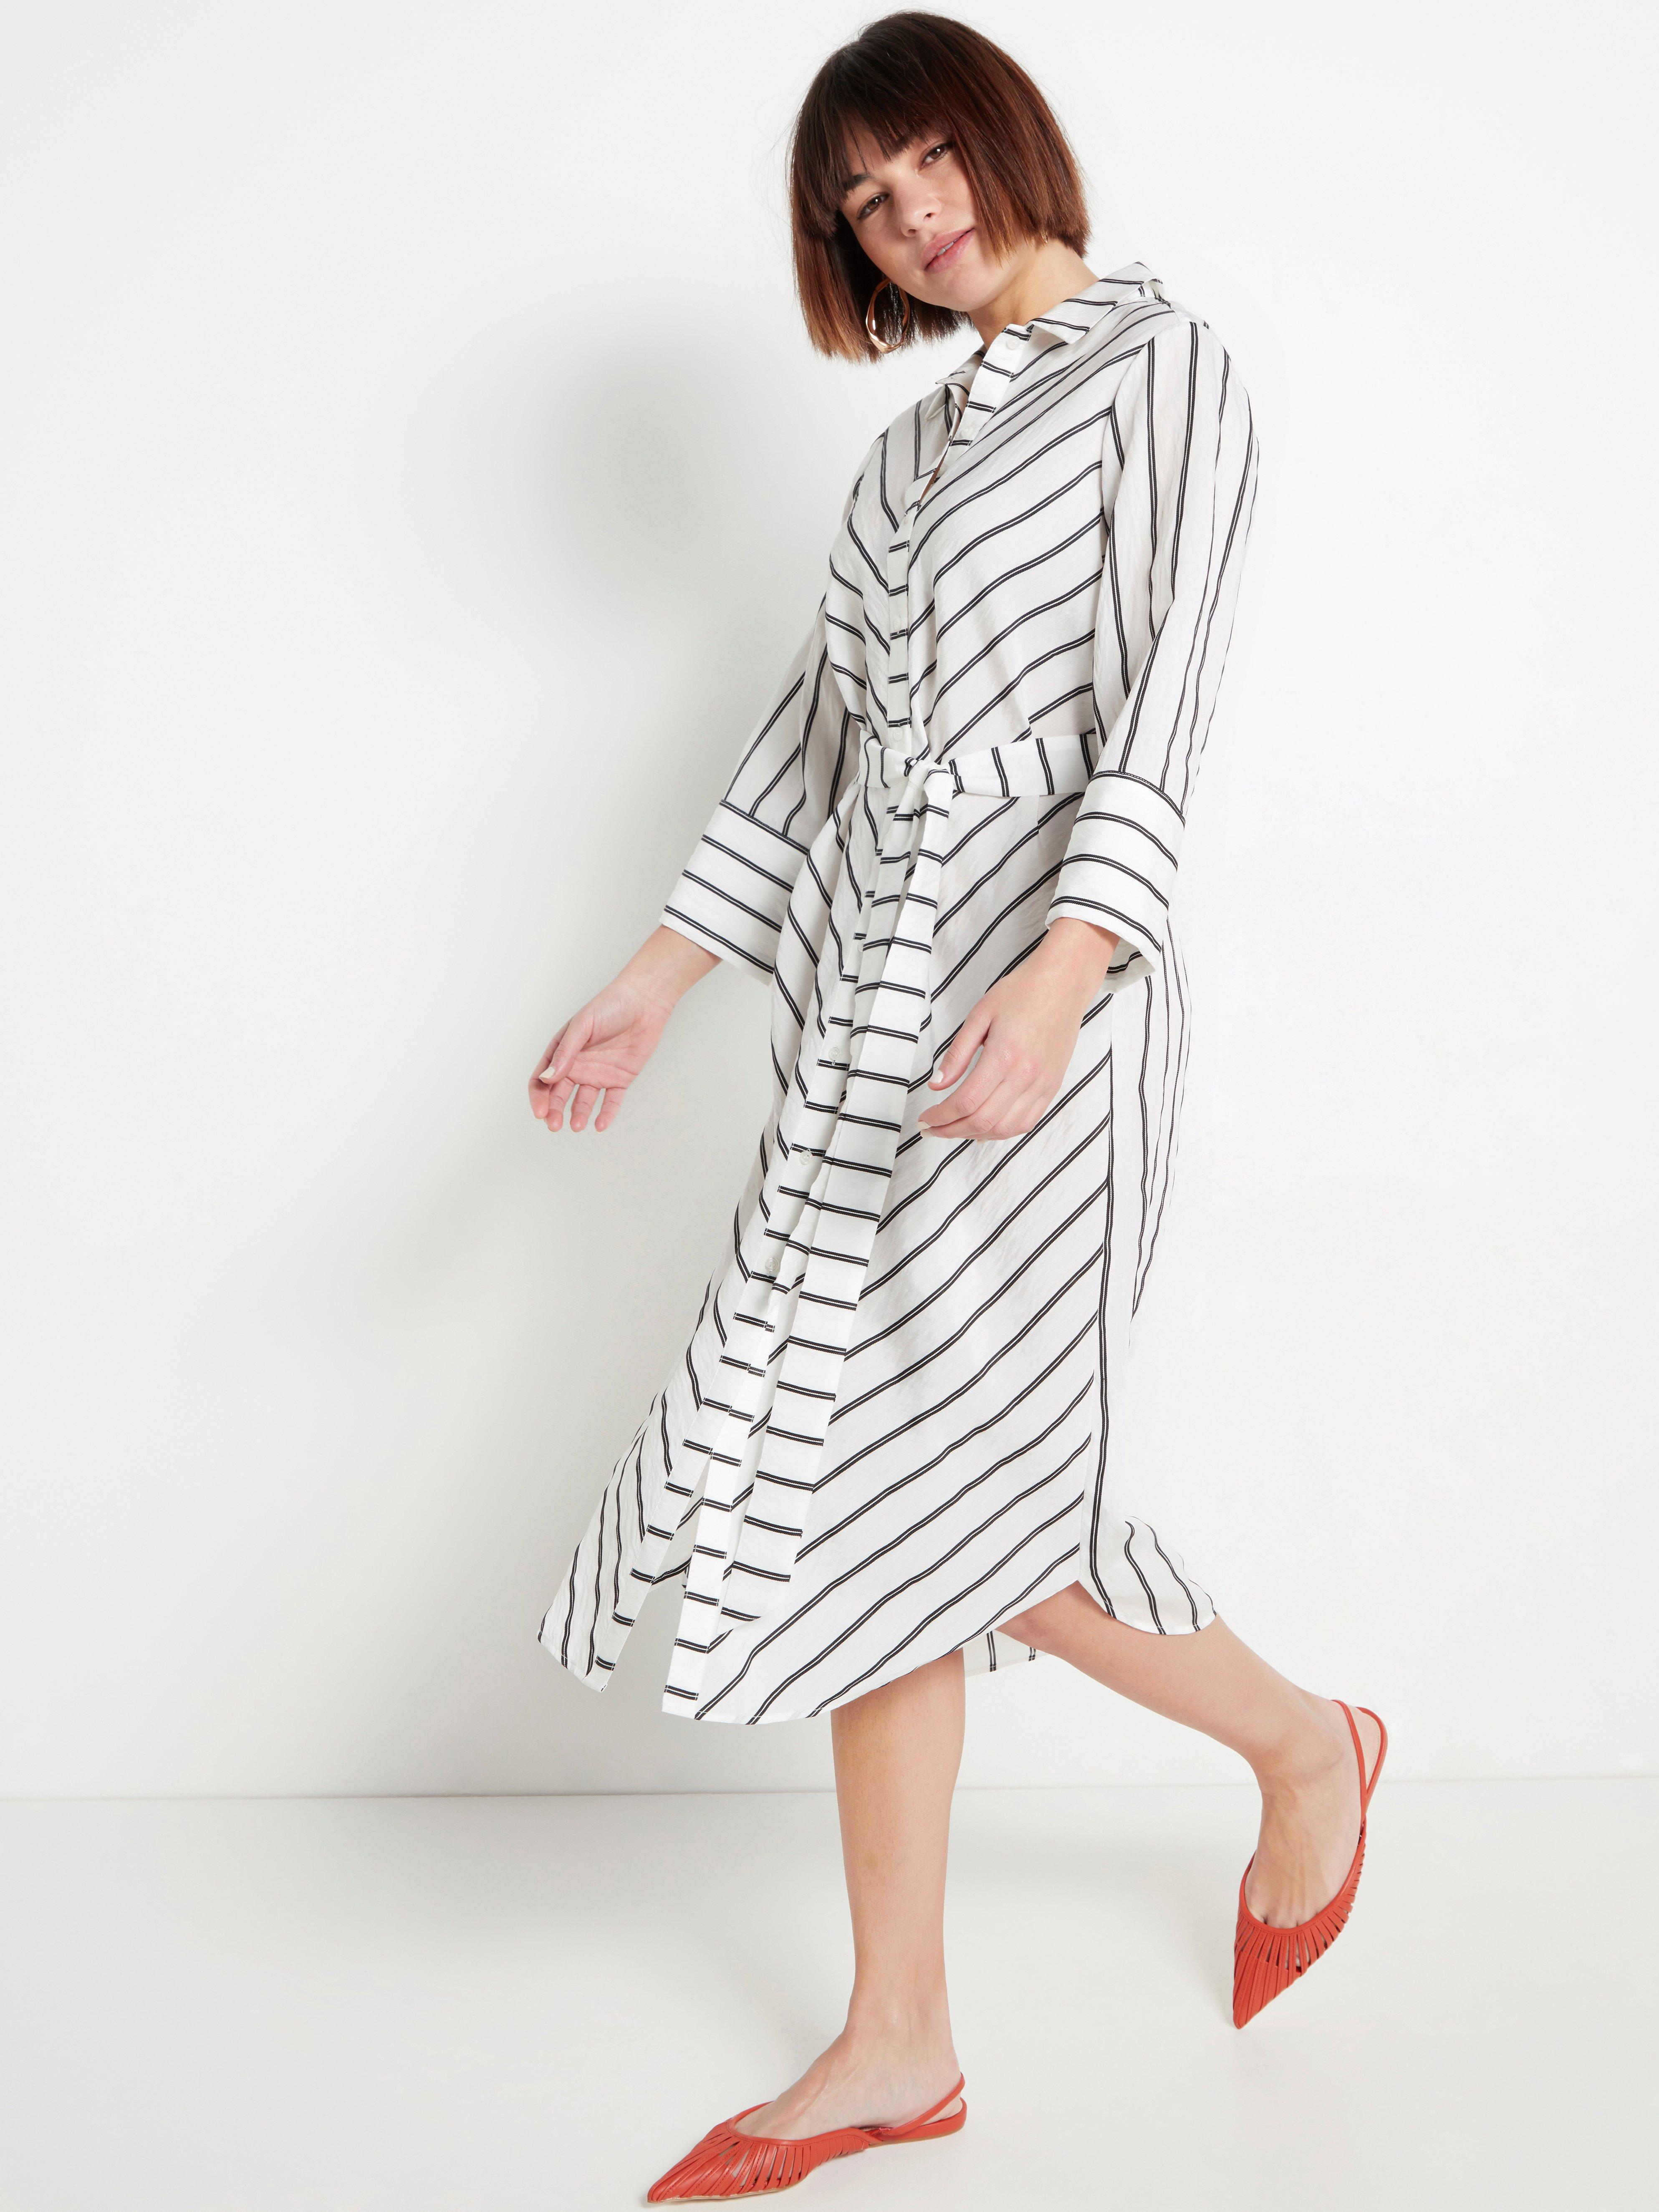 white dress with stripes